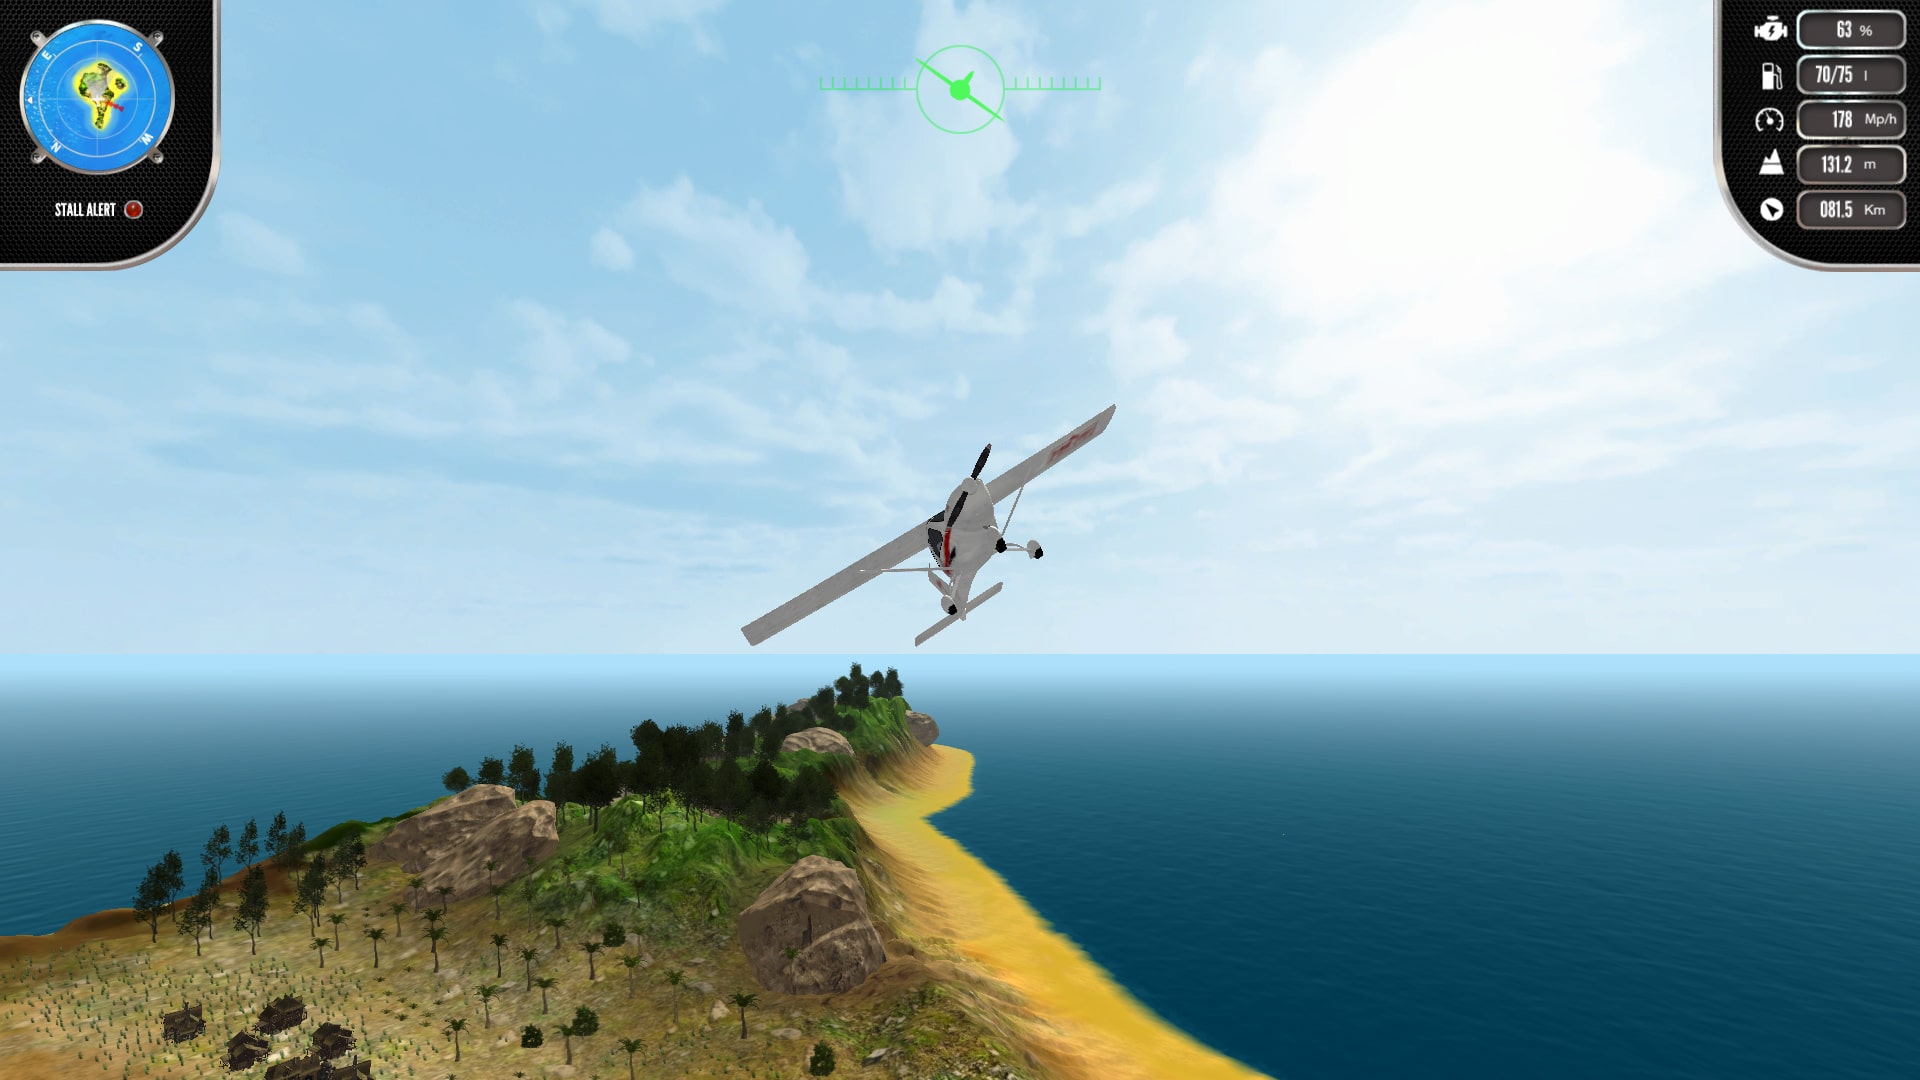 Island Flight Simulator on Steam